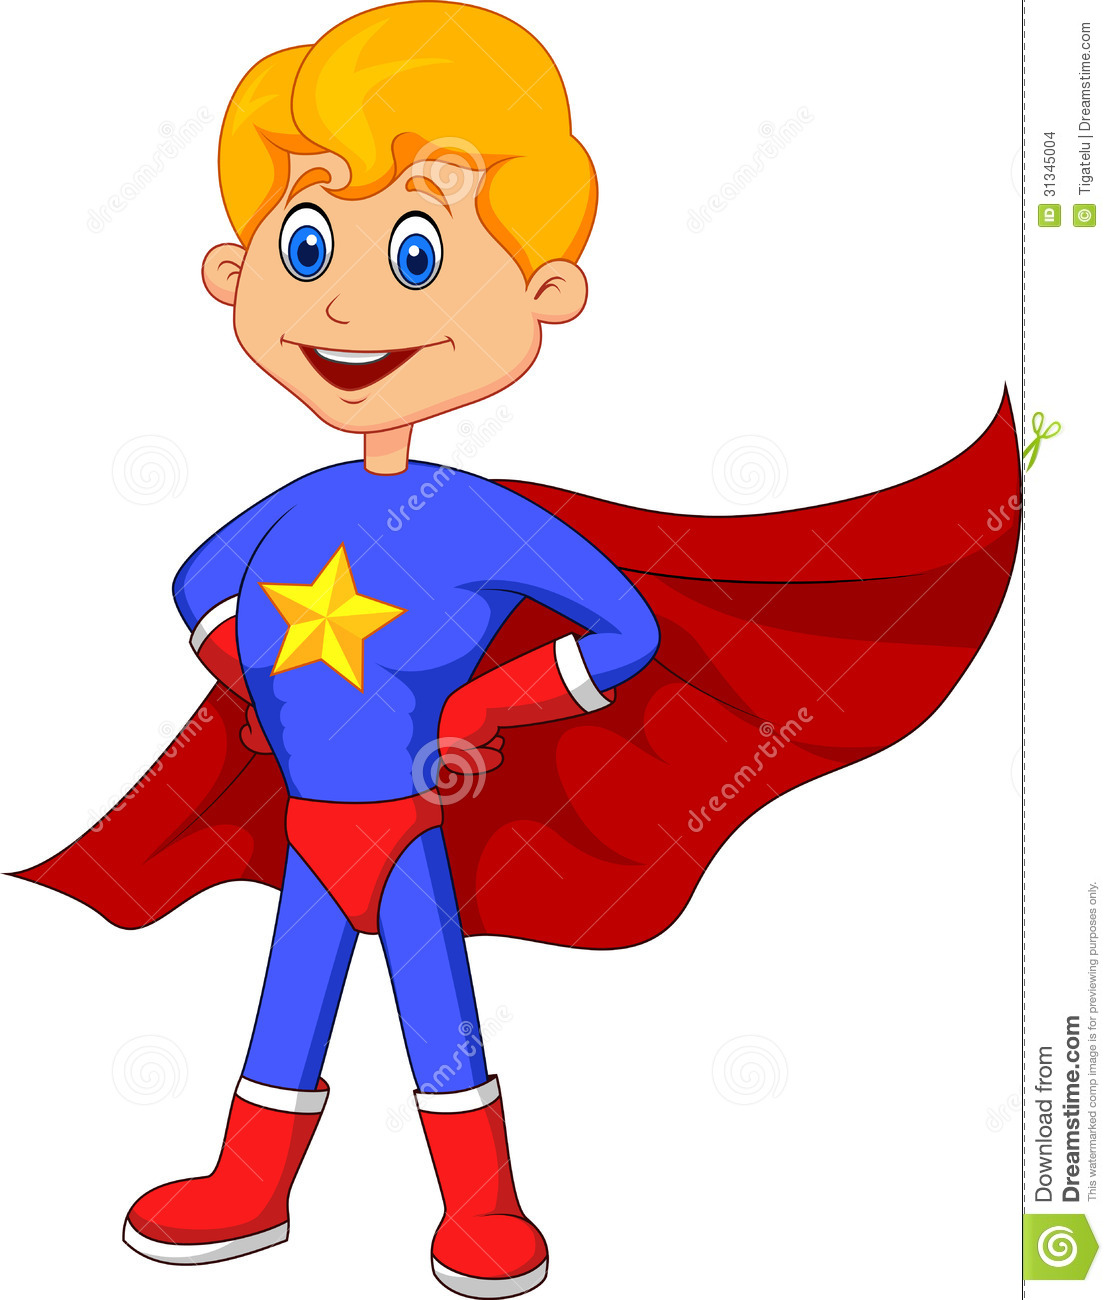 superhero clipart free download - photo #42